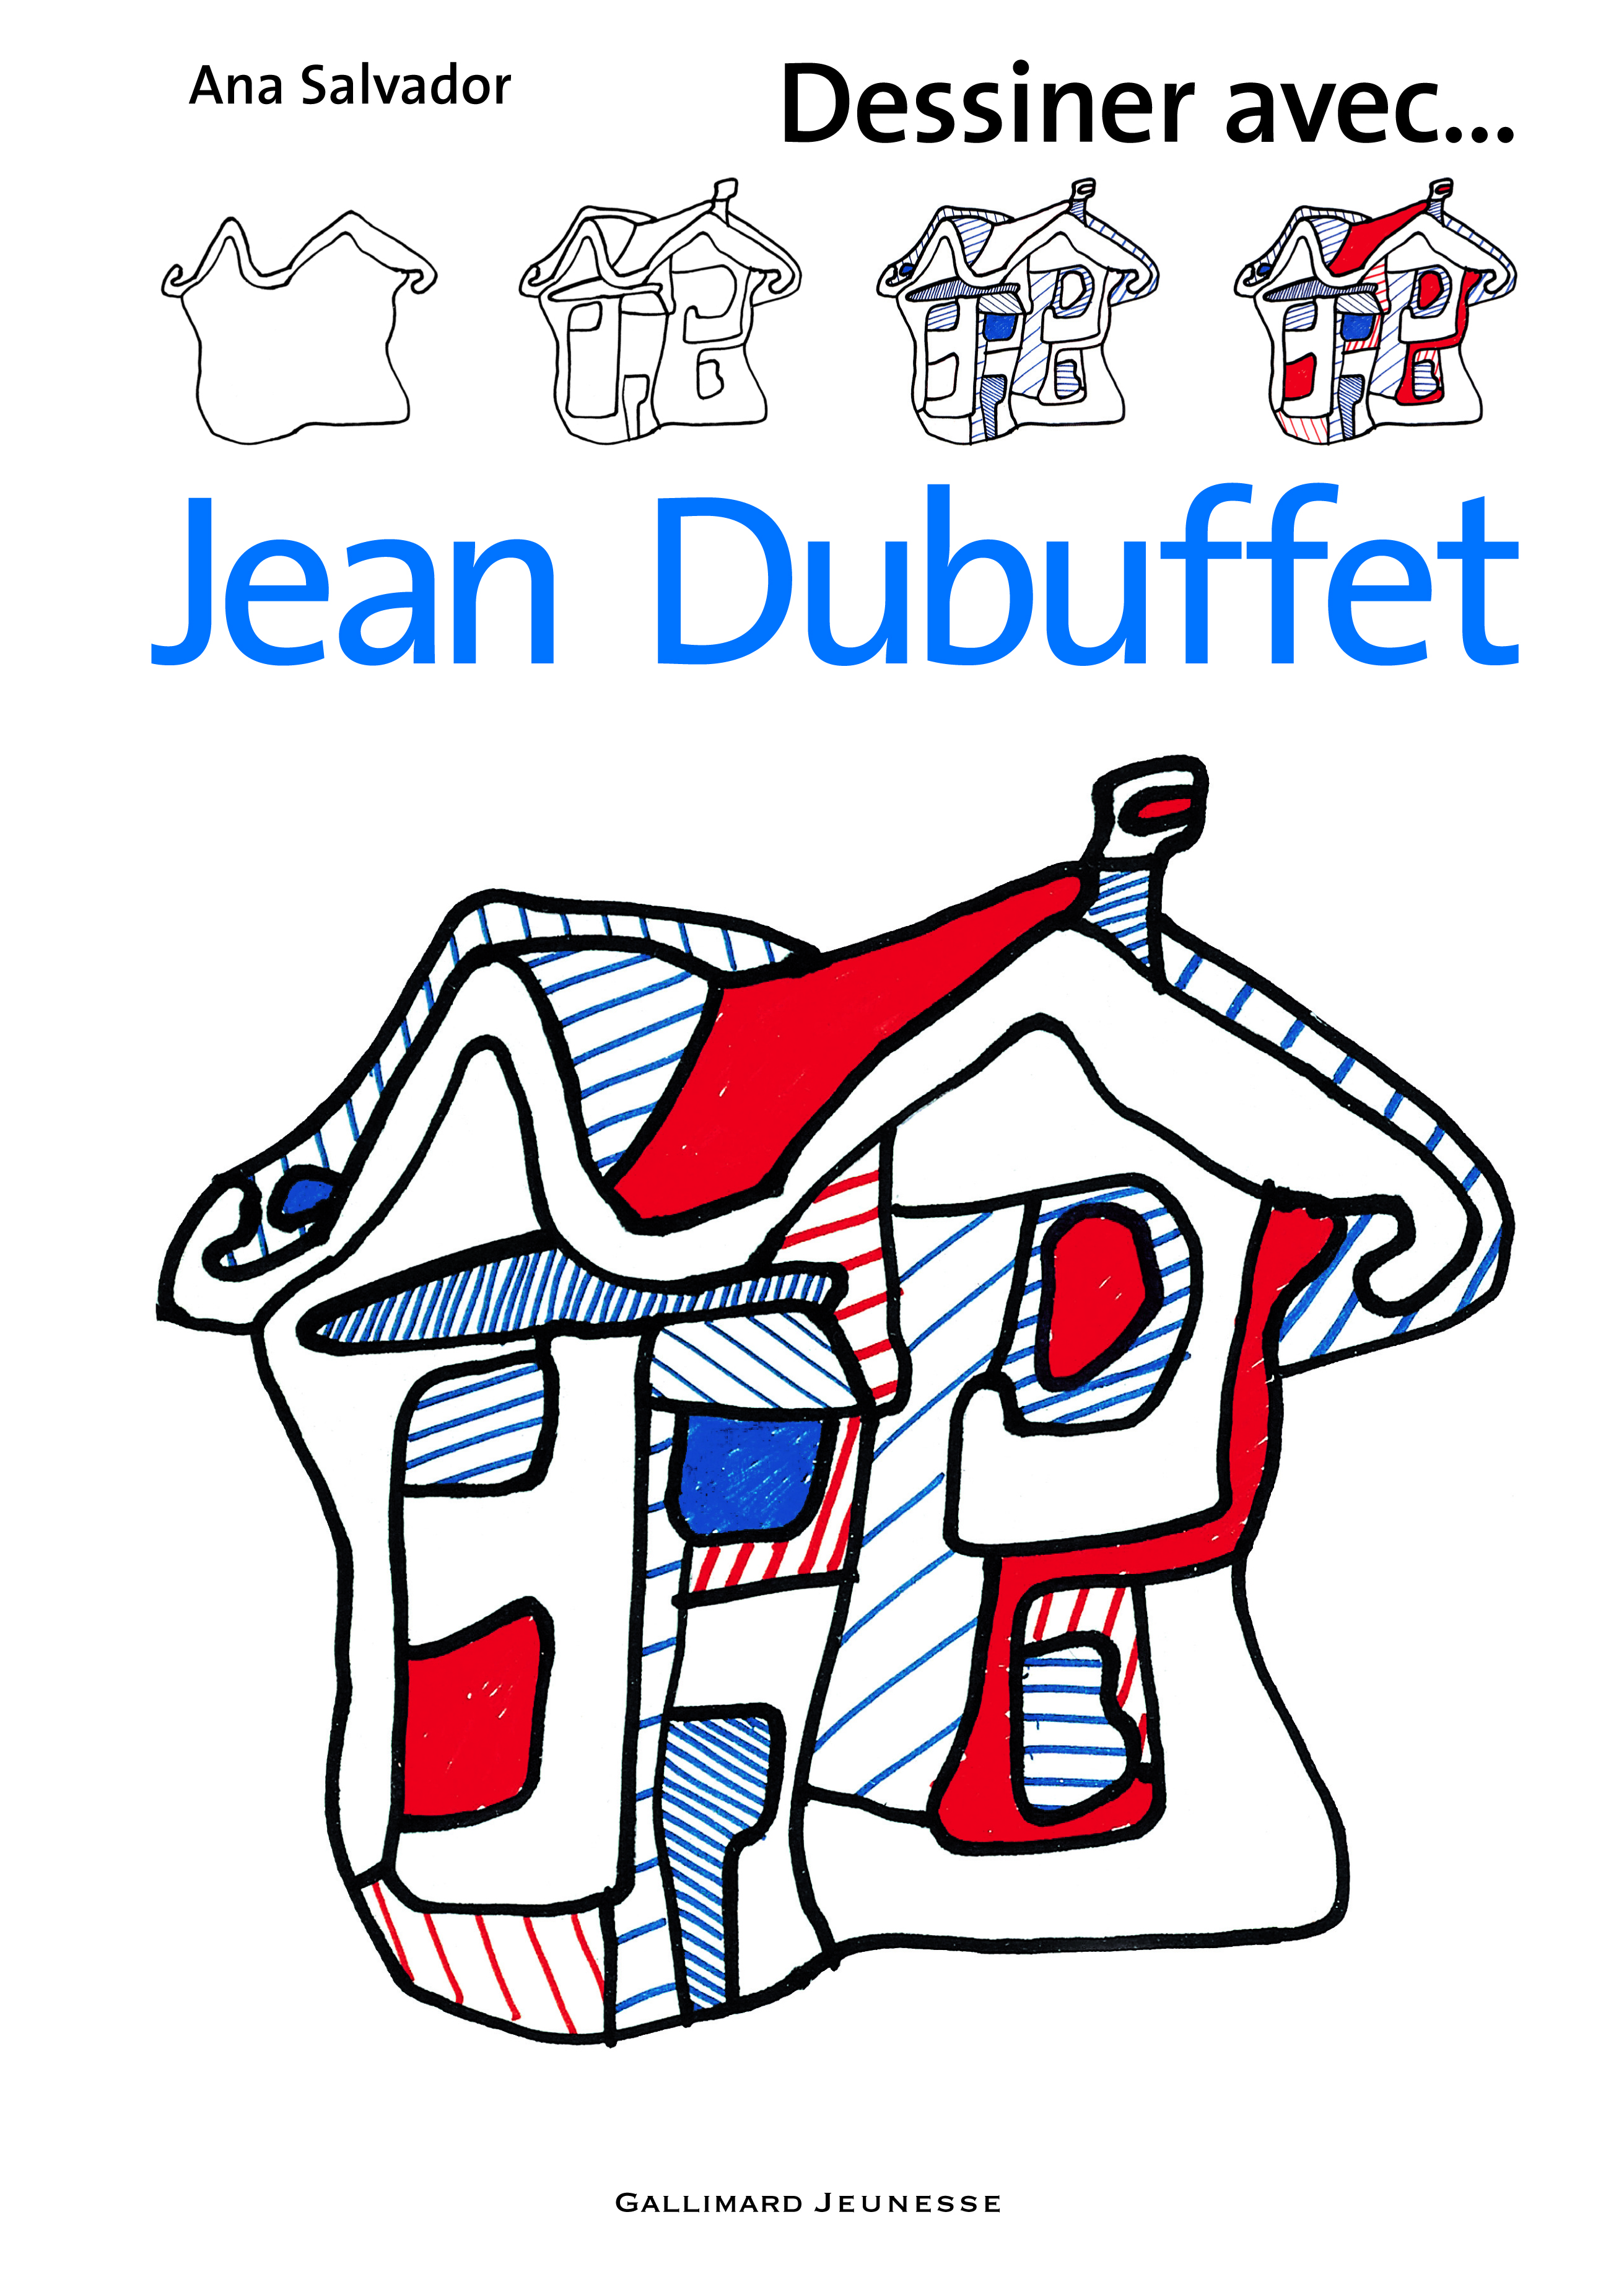 Dessiner avec ... Jean Dubuffet (9782070620500-front-cover)